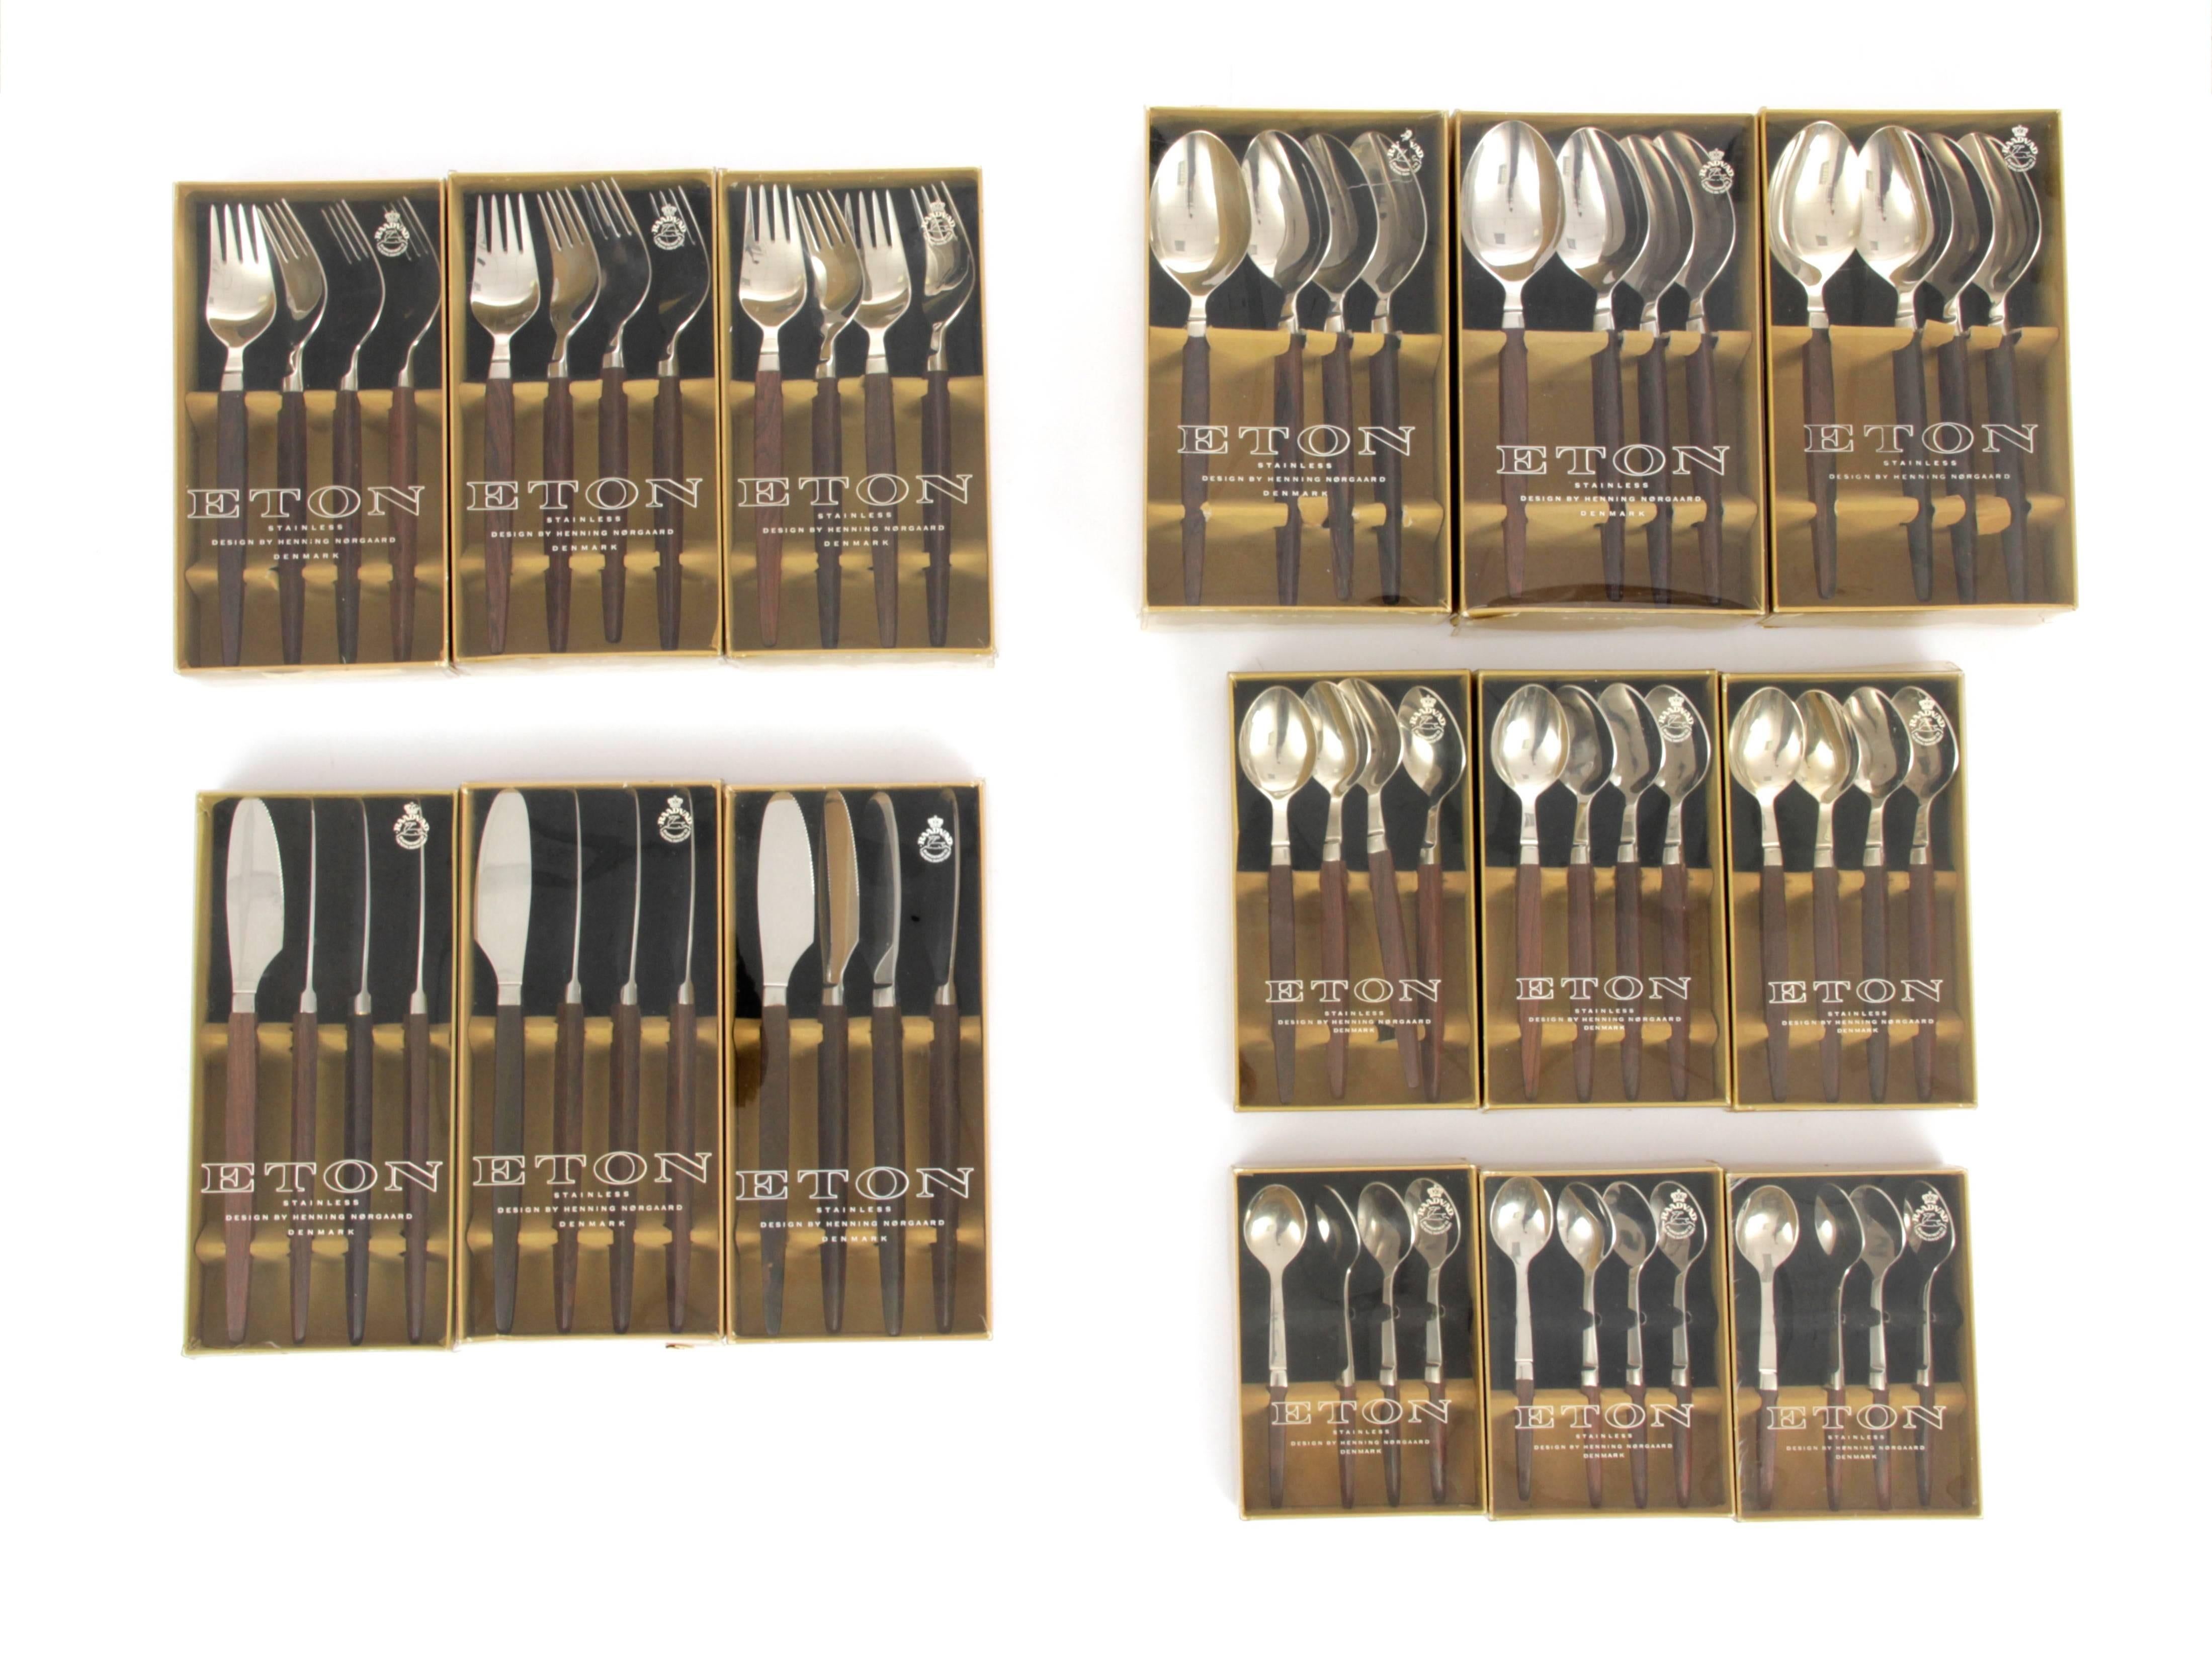 Stainless Steel Mid-Century Modern Scandinavian Cutlery by Henning Nørgaard, Model Eton, 60 Pcs